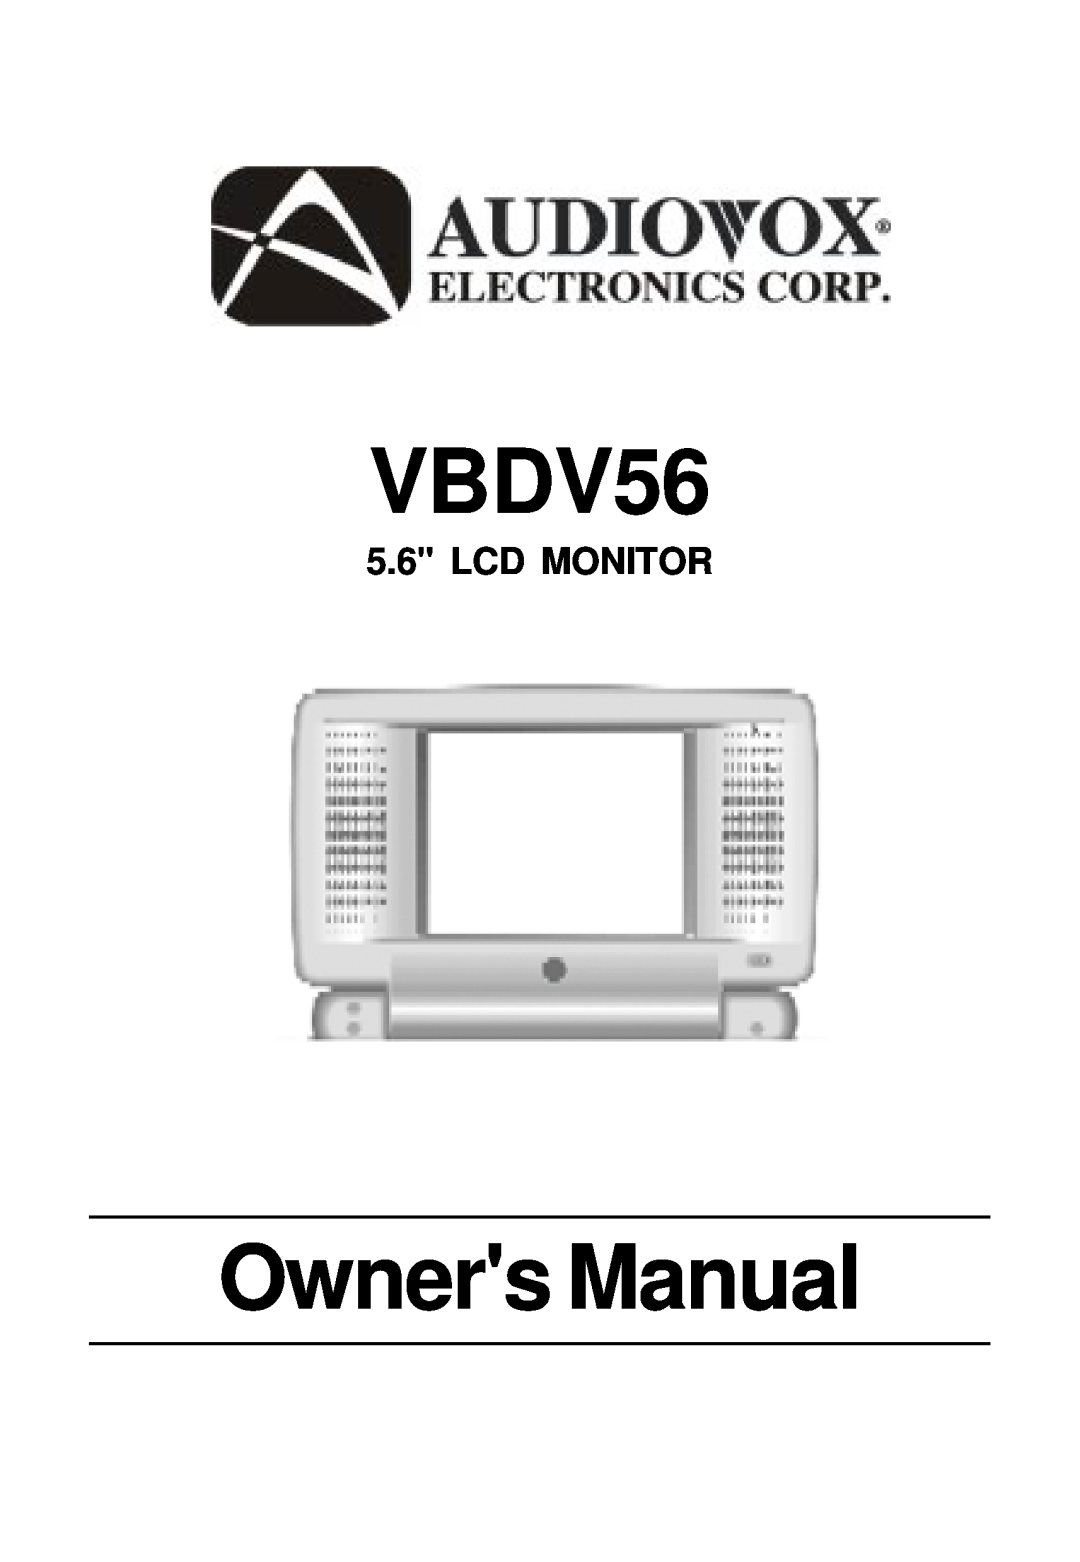 Audiovox VBDV56 owner manual Lcd Monitor, Owners Manual 